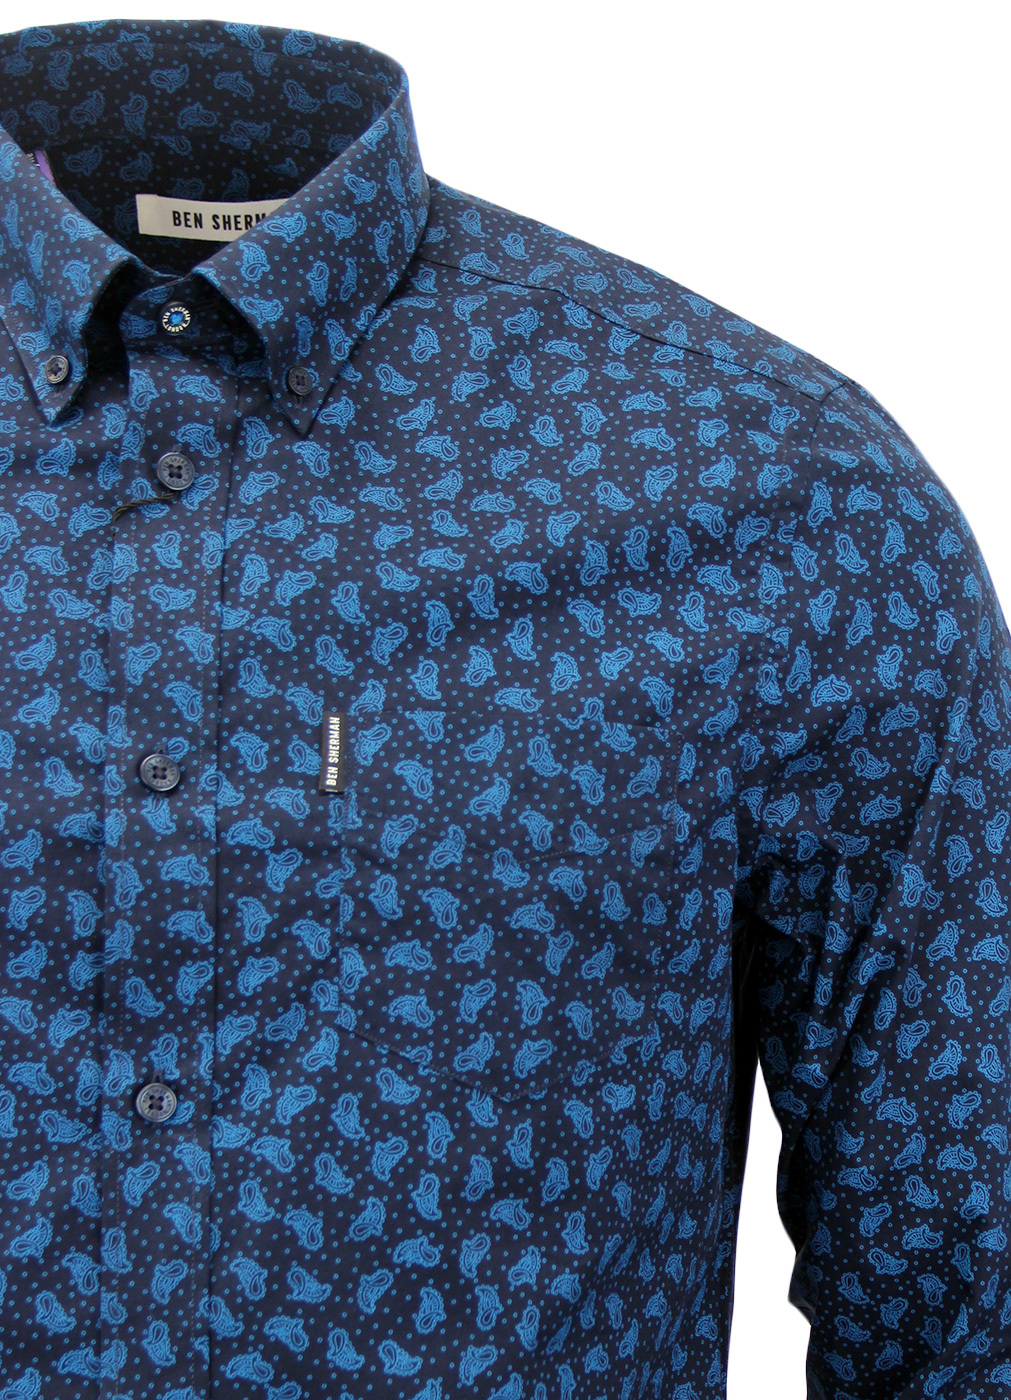 BEN SHERMAN Retro Mod Sixties Paisley Dot Shirt in Vivid Blue